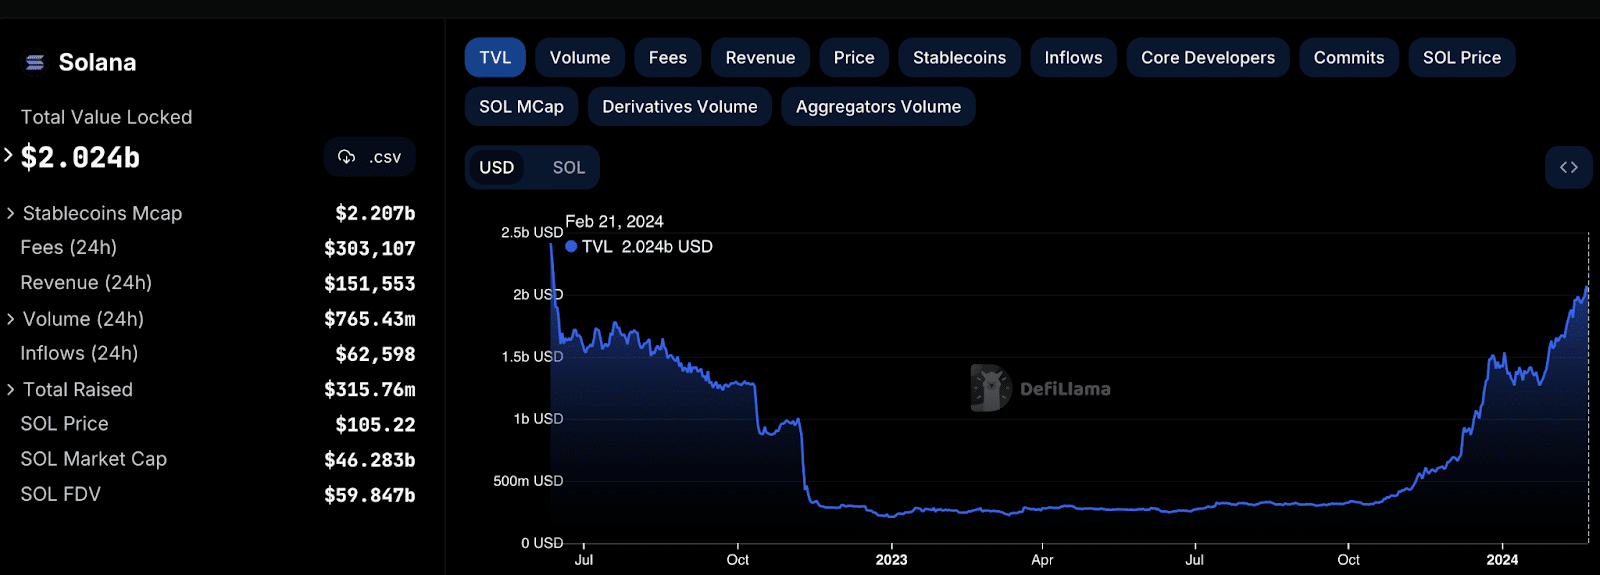 Solana (SOL) Total Value Locked (TVL) hits $2 billion, Feb. 21, 2024